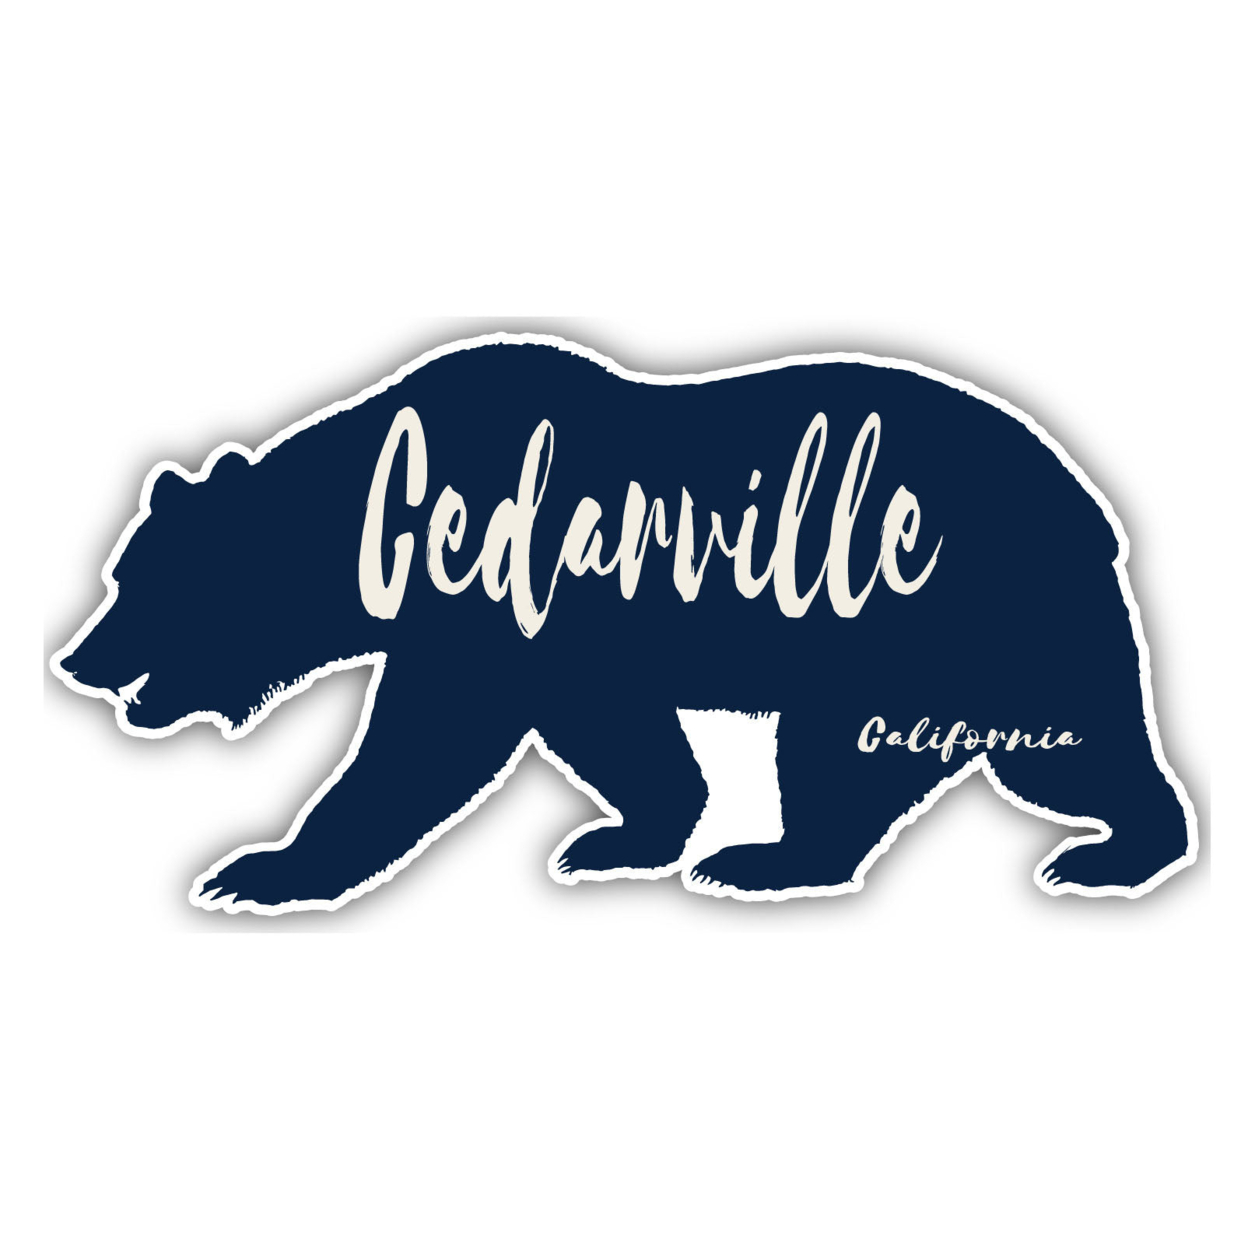 Cedarville California Souvenir Decorative Stickers (Choose Theme And Size) - Single Unit, 4-Inch, Bear